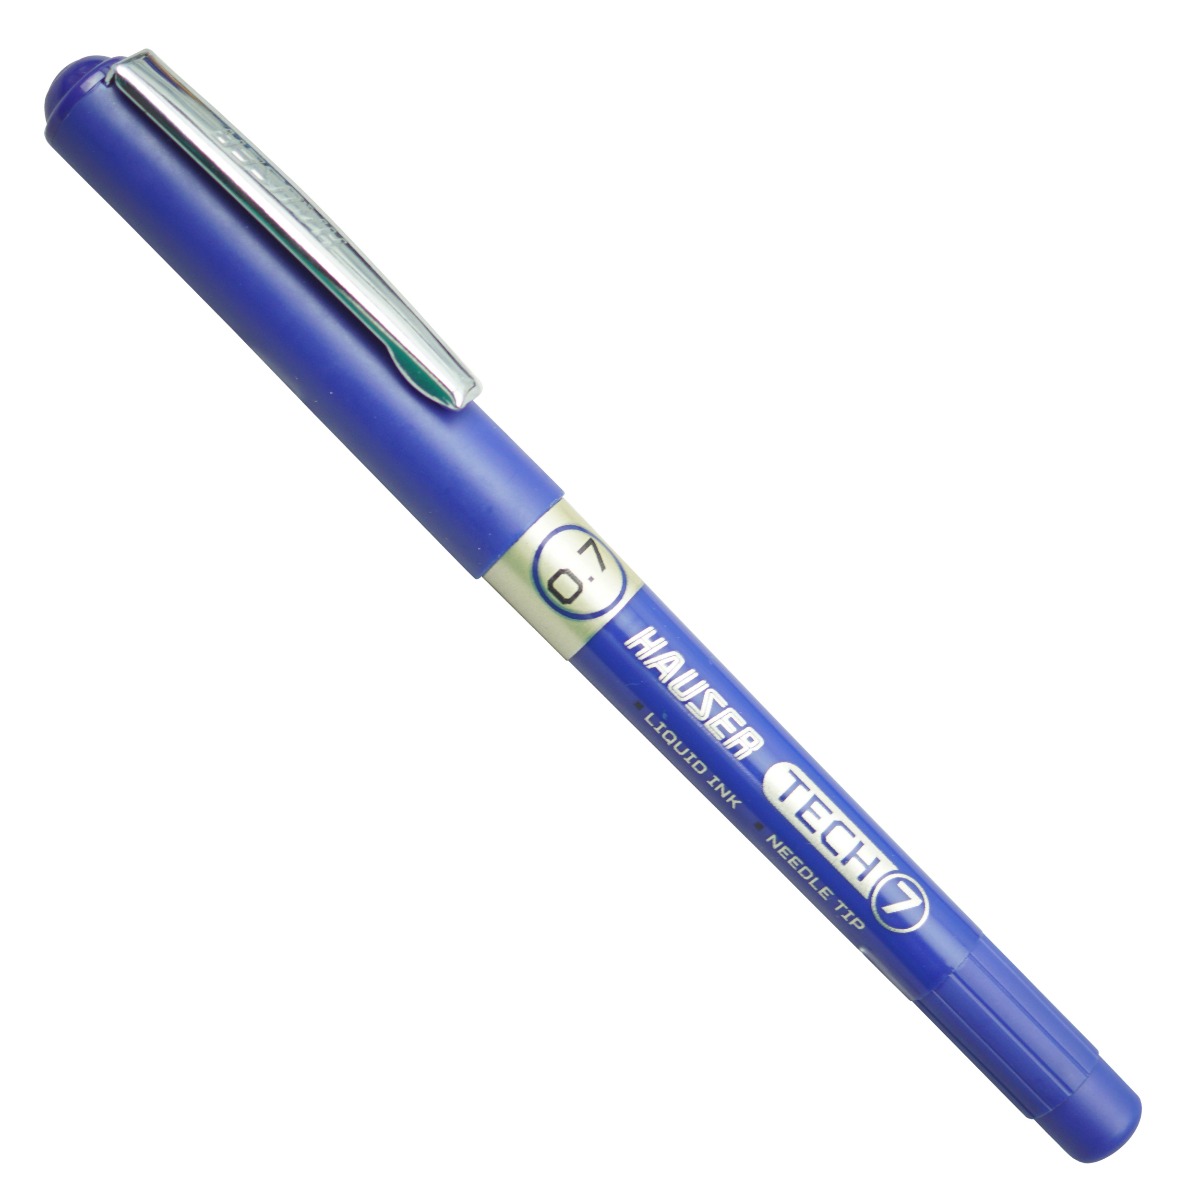 Hauser Tech 7 Liquid Ink Pen  Model : 17772  Full Blue Color Body 0.7 mm Blue Writing Gell Pen 